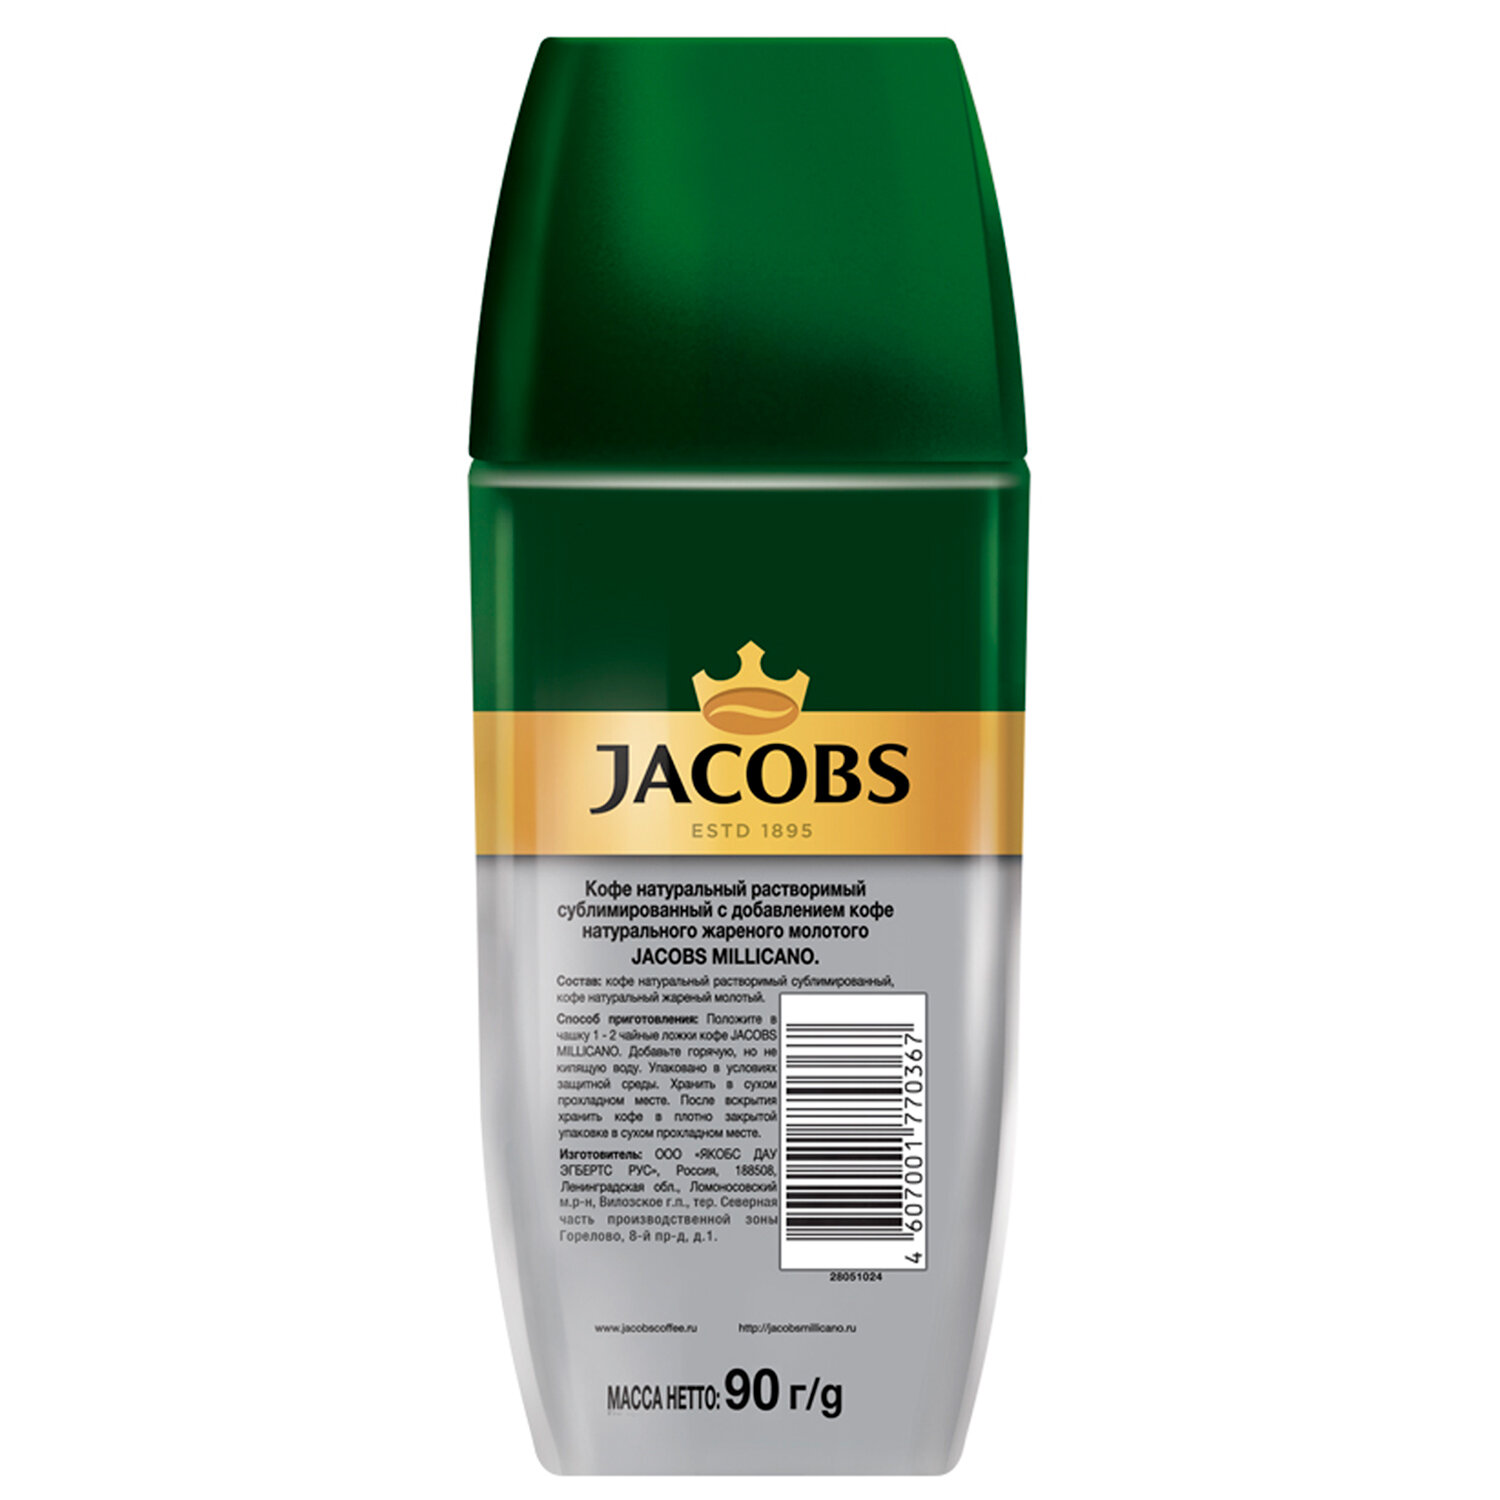 Кофе растворимый миликано. Jacobs Millicano 160. Jacobs Monarch Millicano. Jacobs Millicano молотый в растворимом 90г. Кофе Jacobs Millicano 90г.